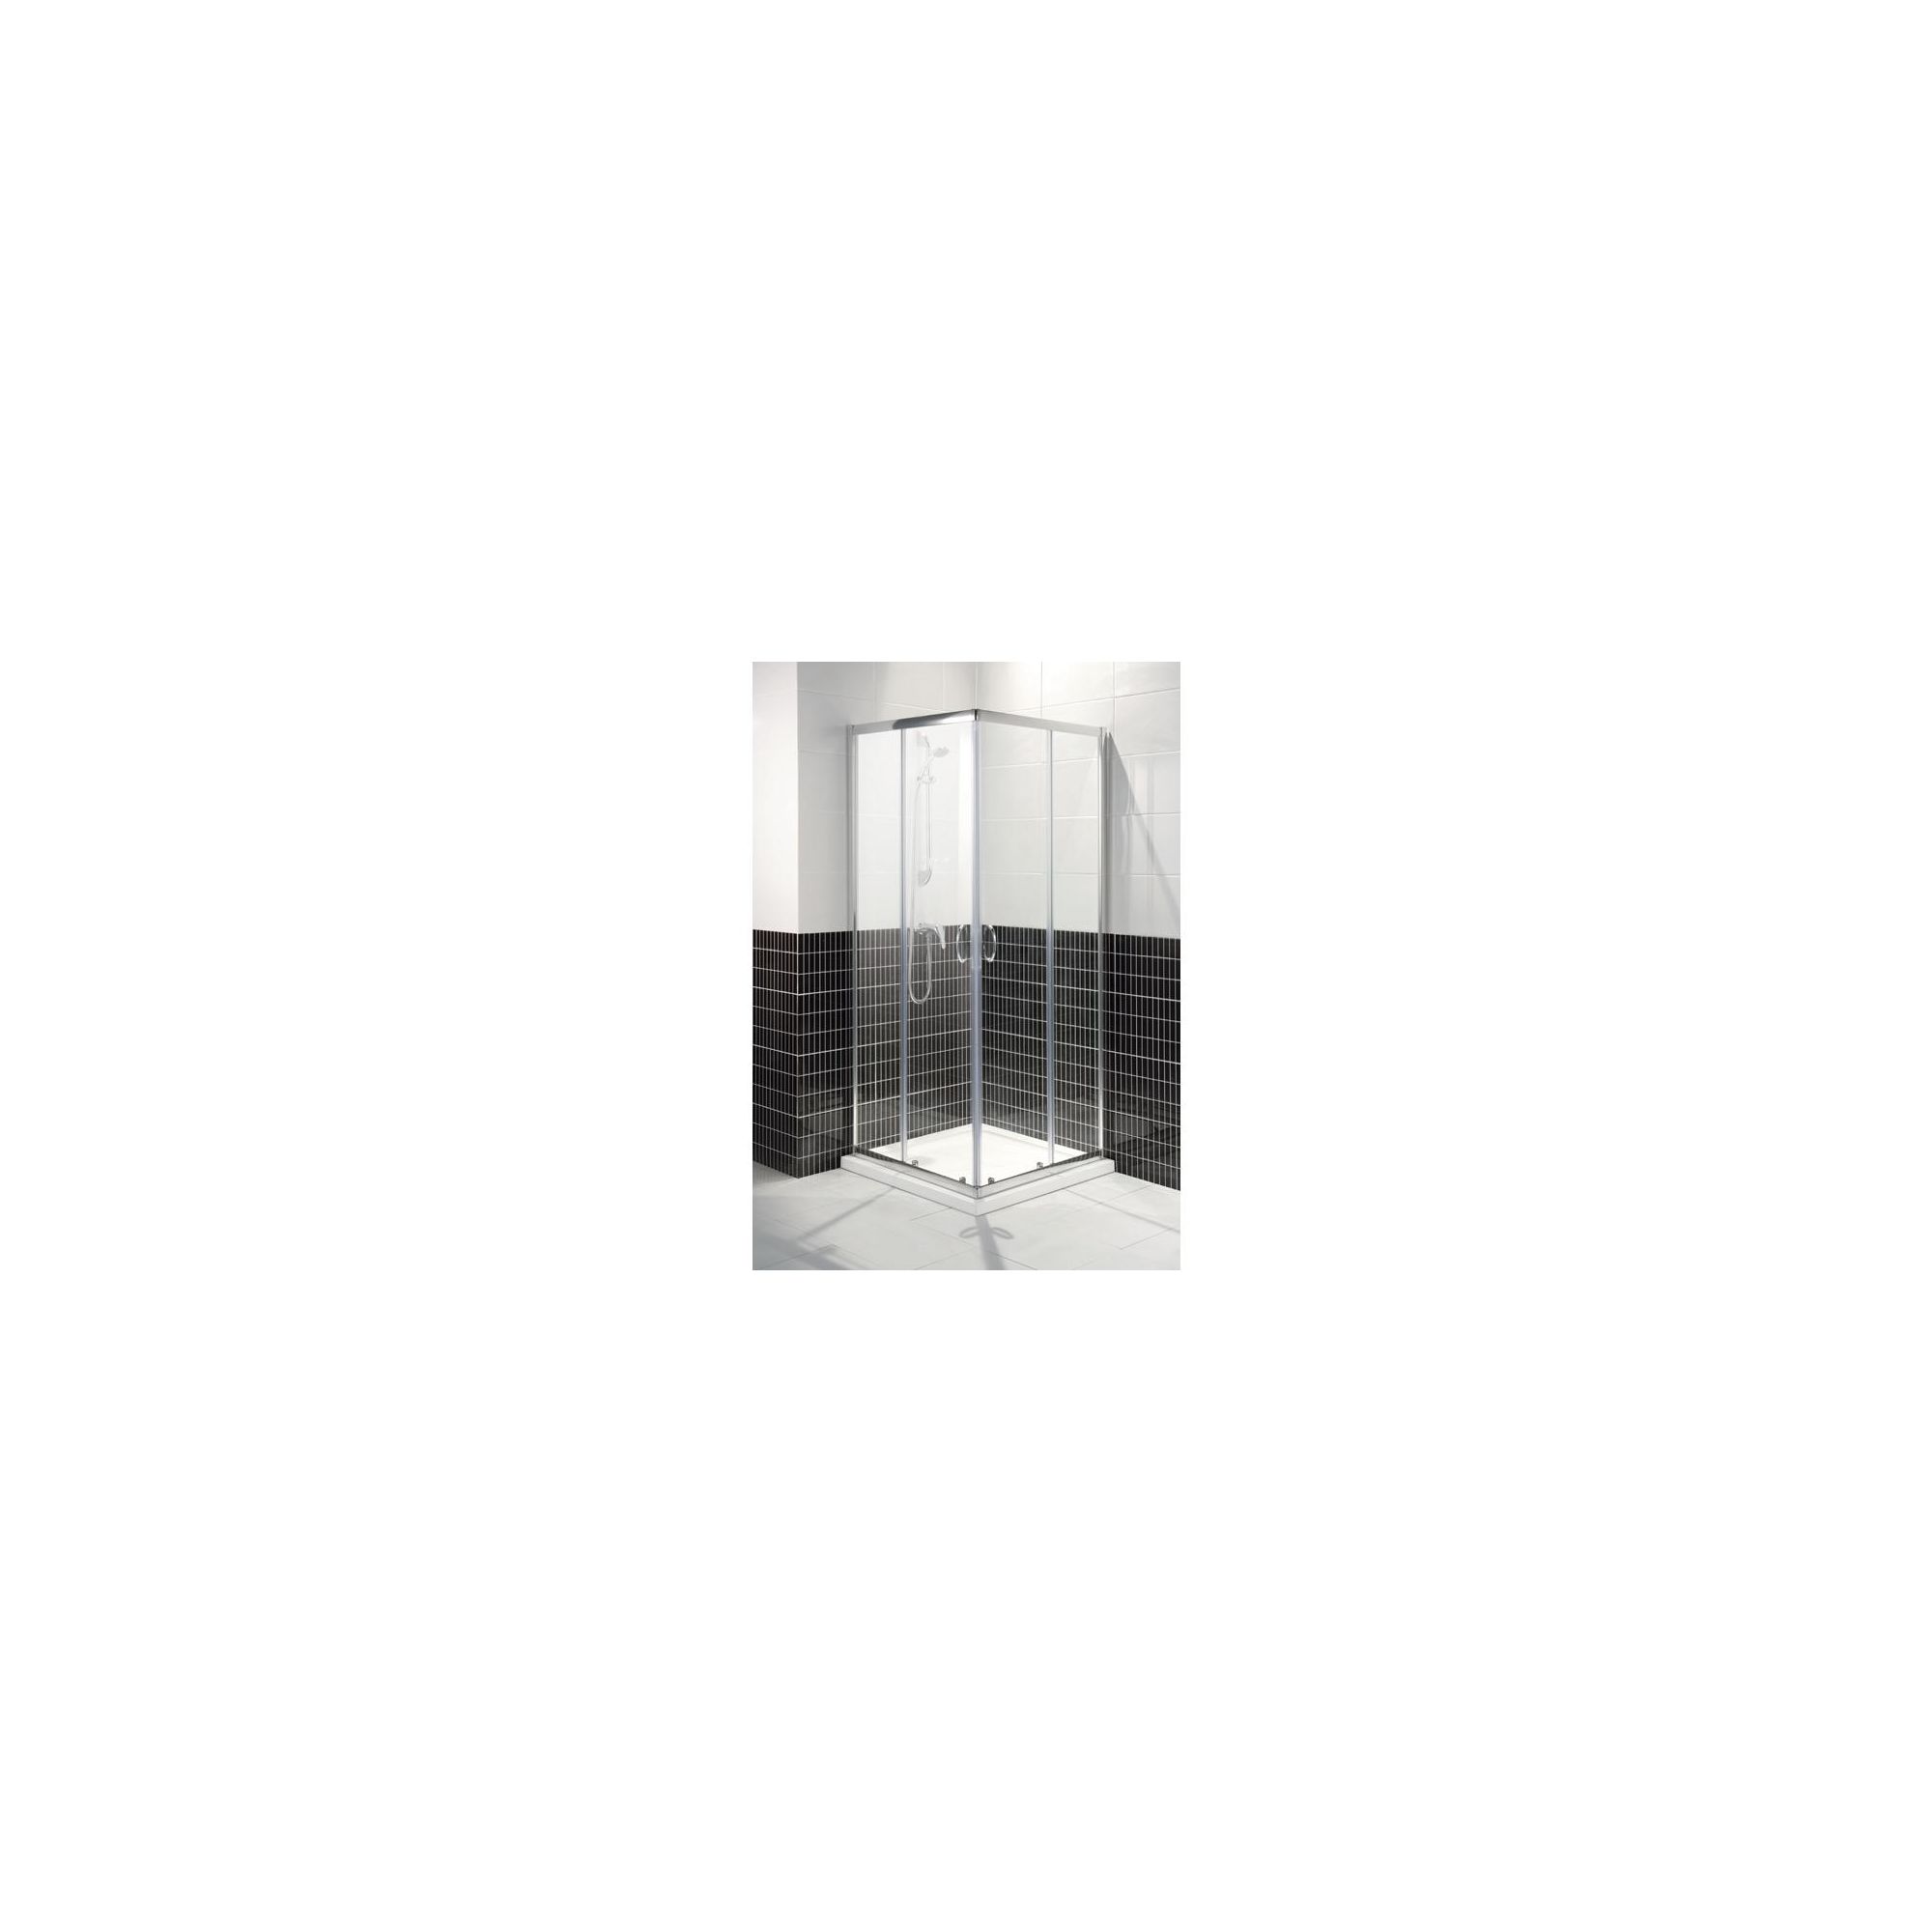 Balterley Framed Corner Entry Shower Enclosure, 800mm x 800mm, Standard Tray, 6mm glass at Tesco Direct